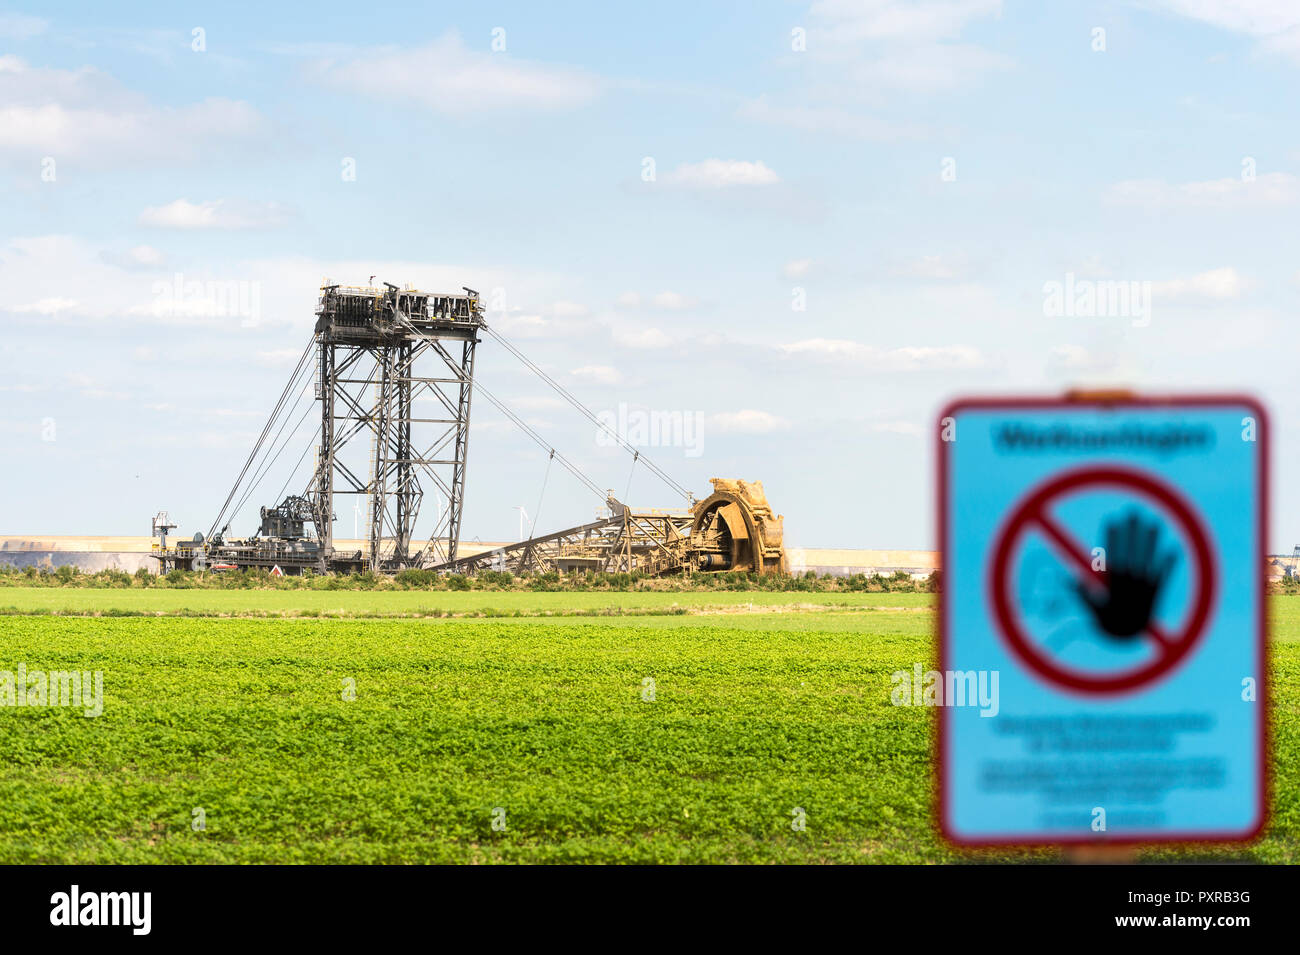 Germany, Garzweiler surface mine, warning sign and giant bucket-wheel excavator Stock Photo